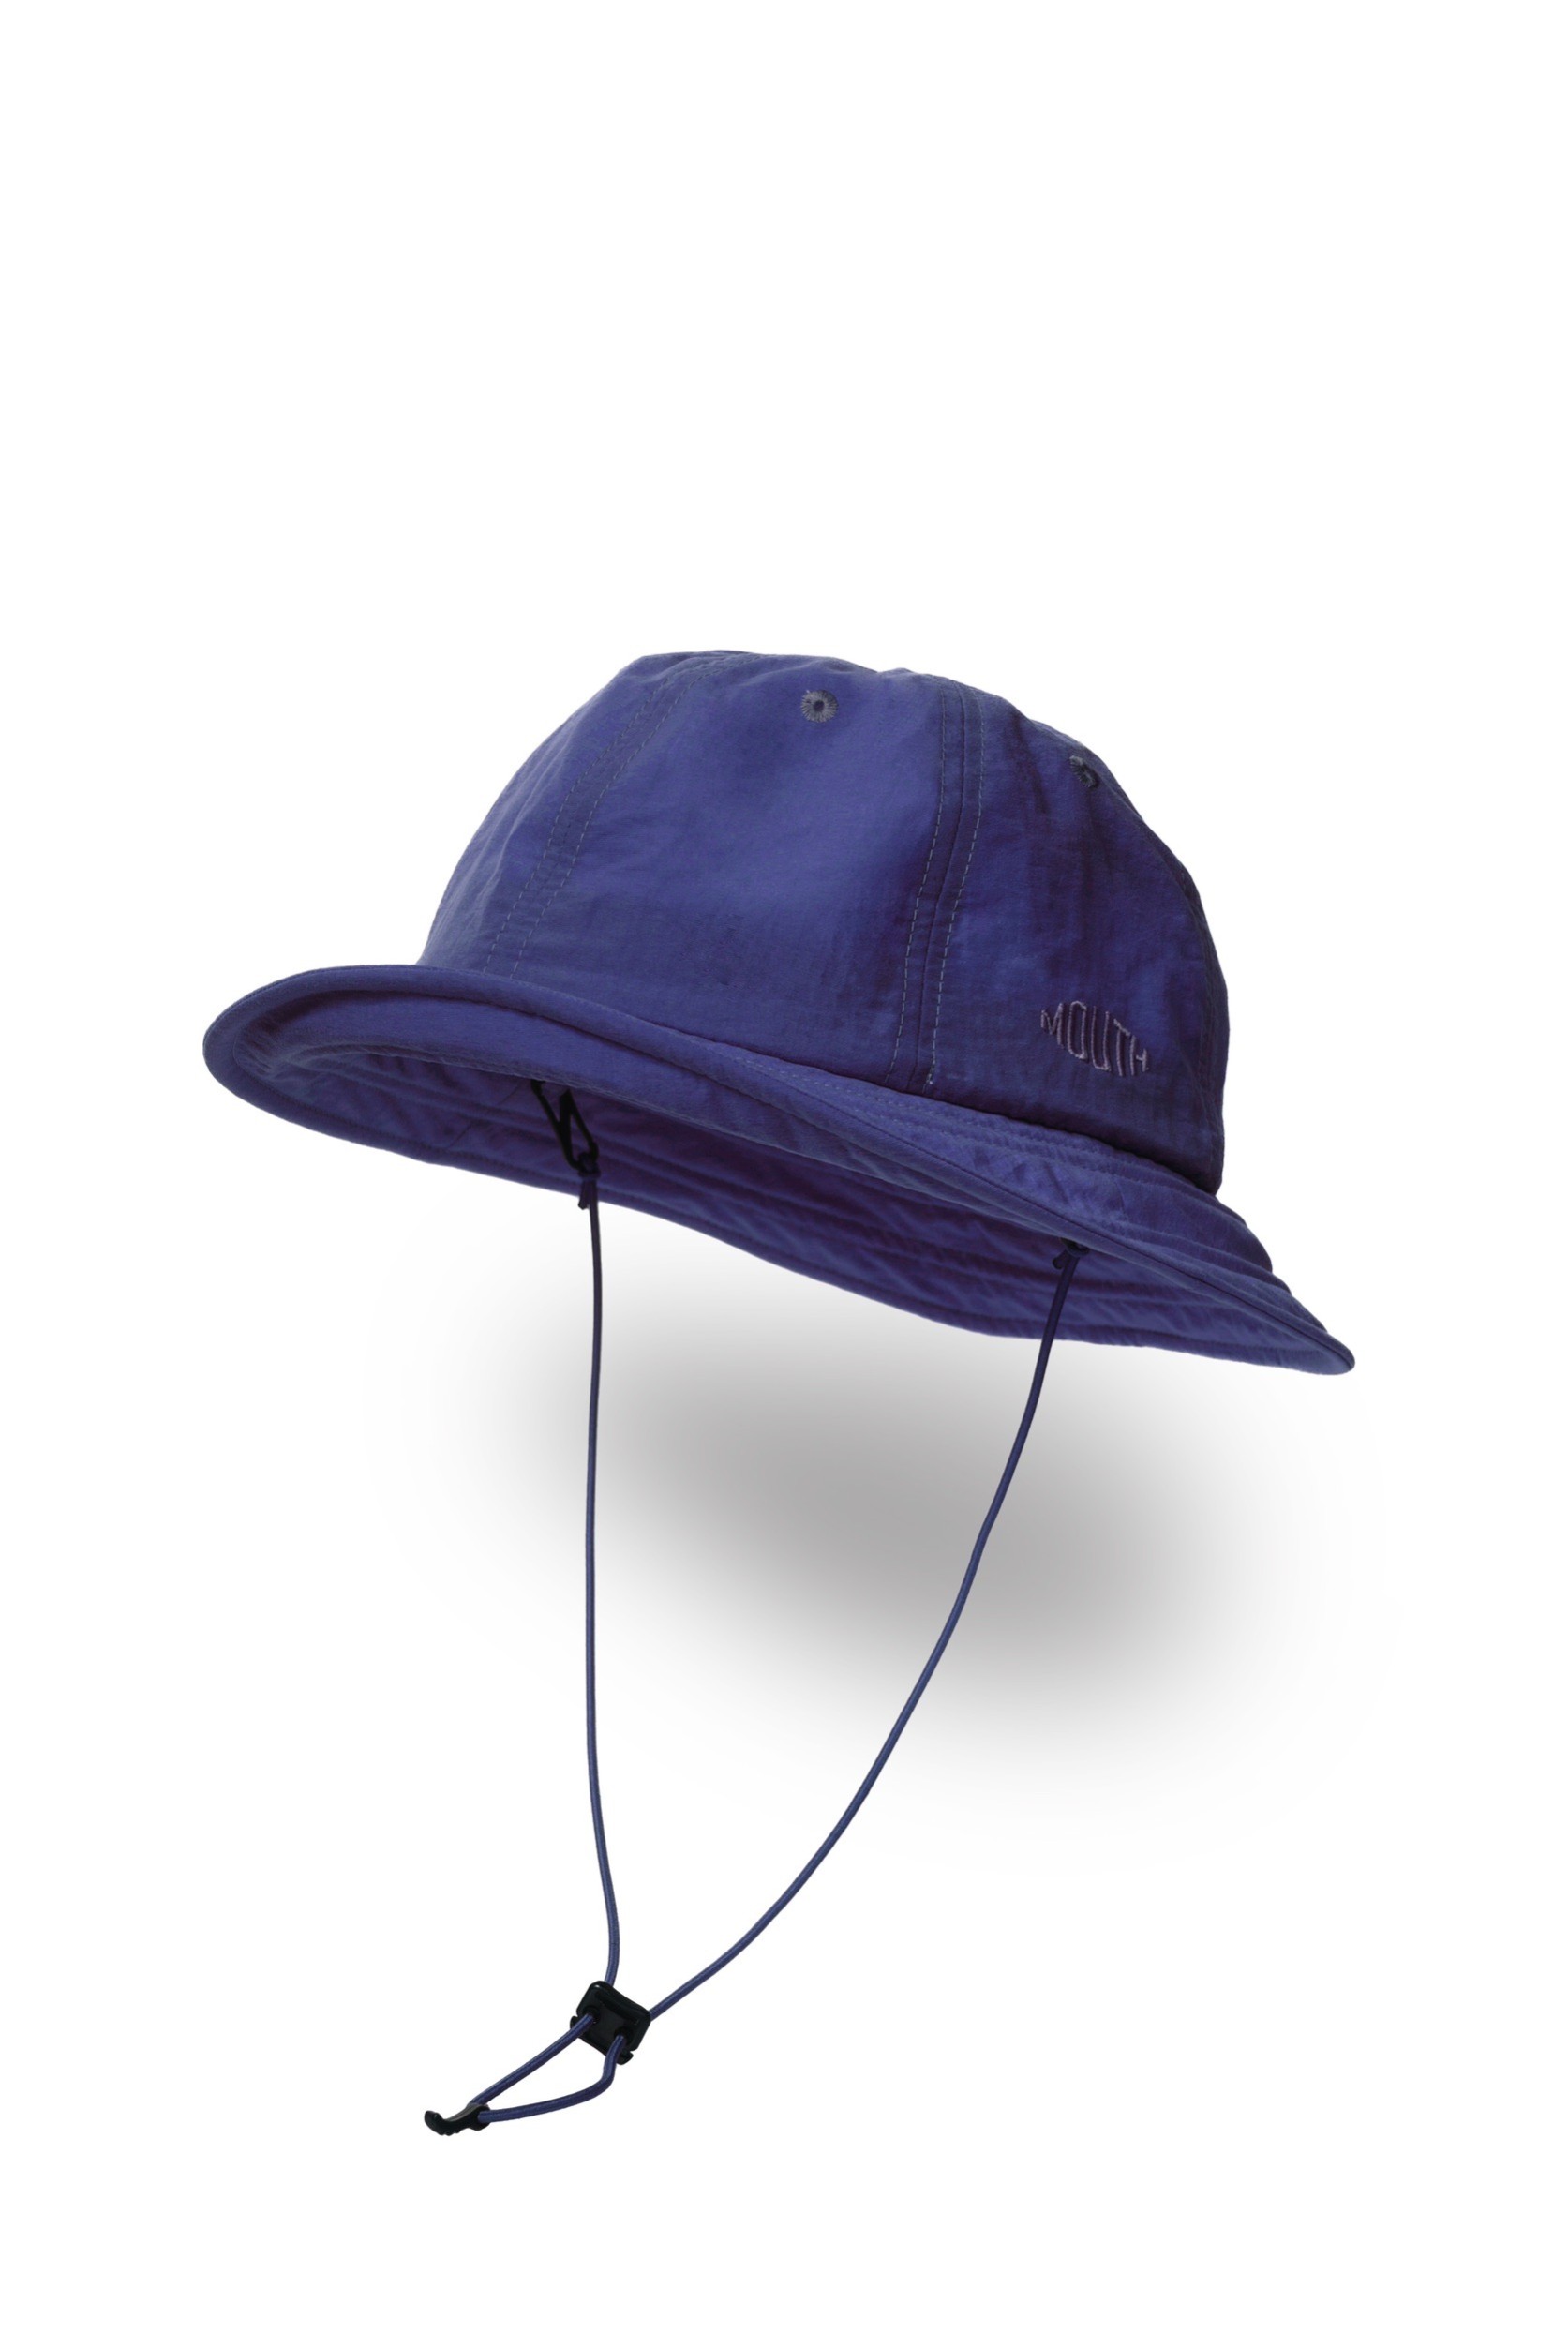 MHW24098 Flex Multi Hat (NAVY) 12月20日12:00発売 メール便送料無料